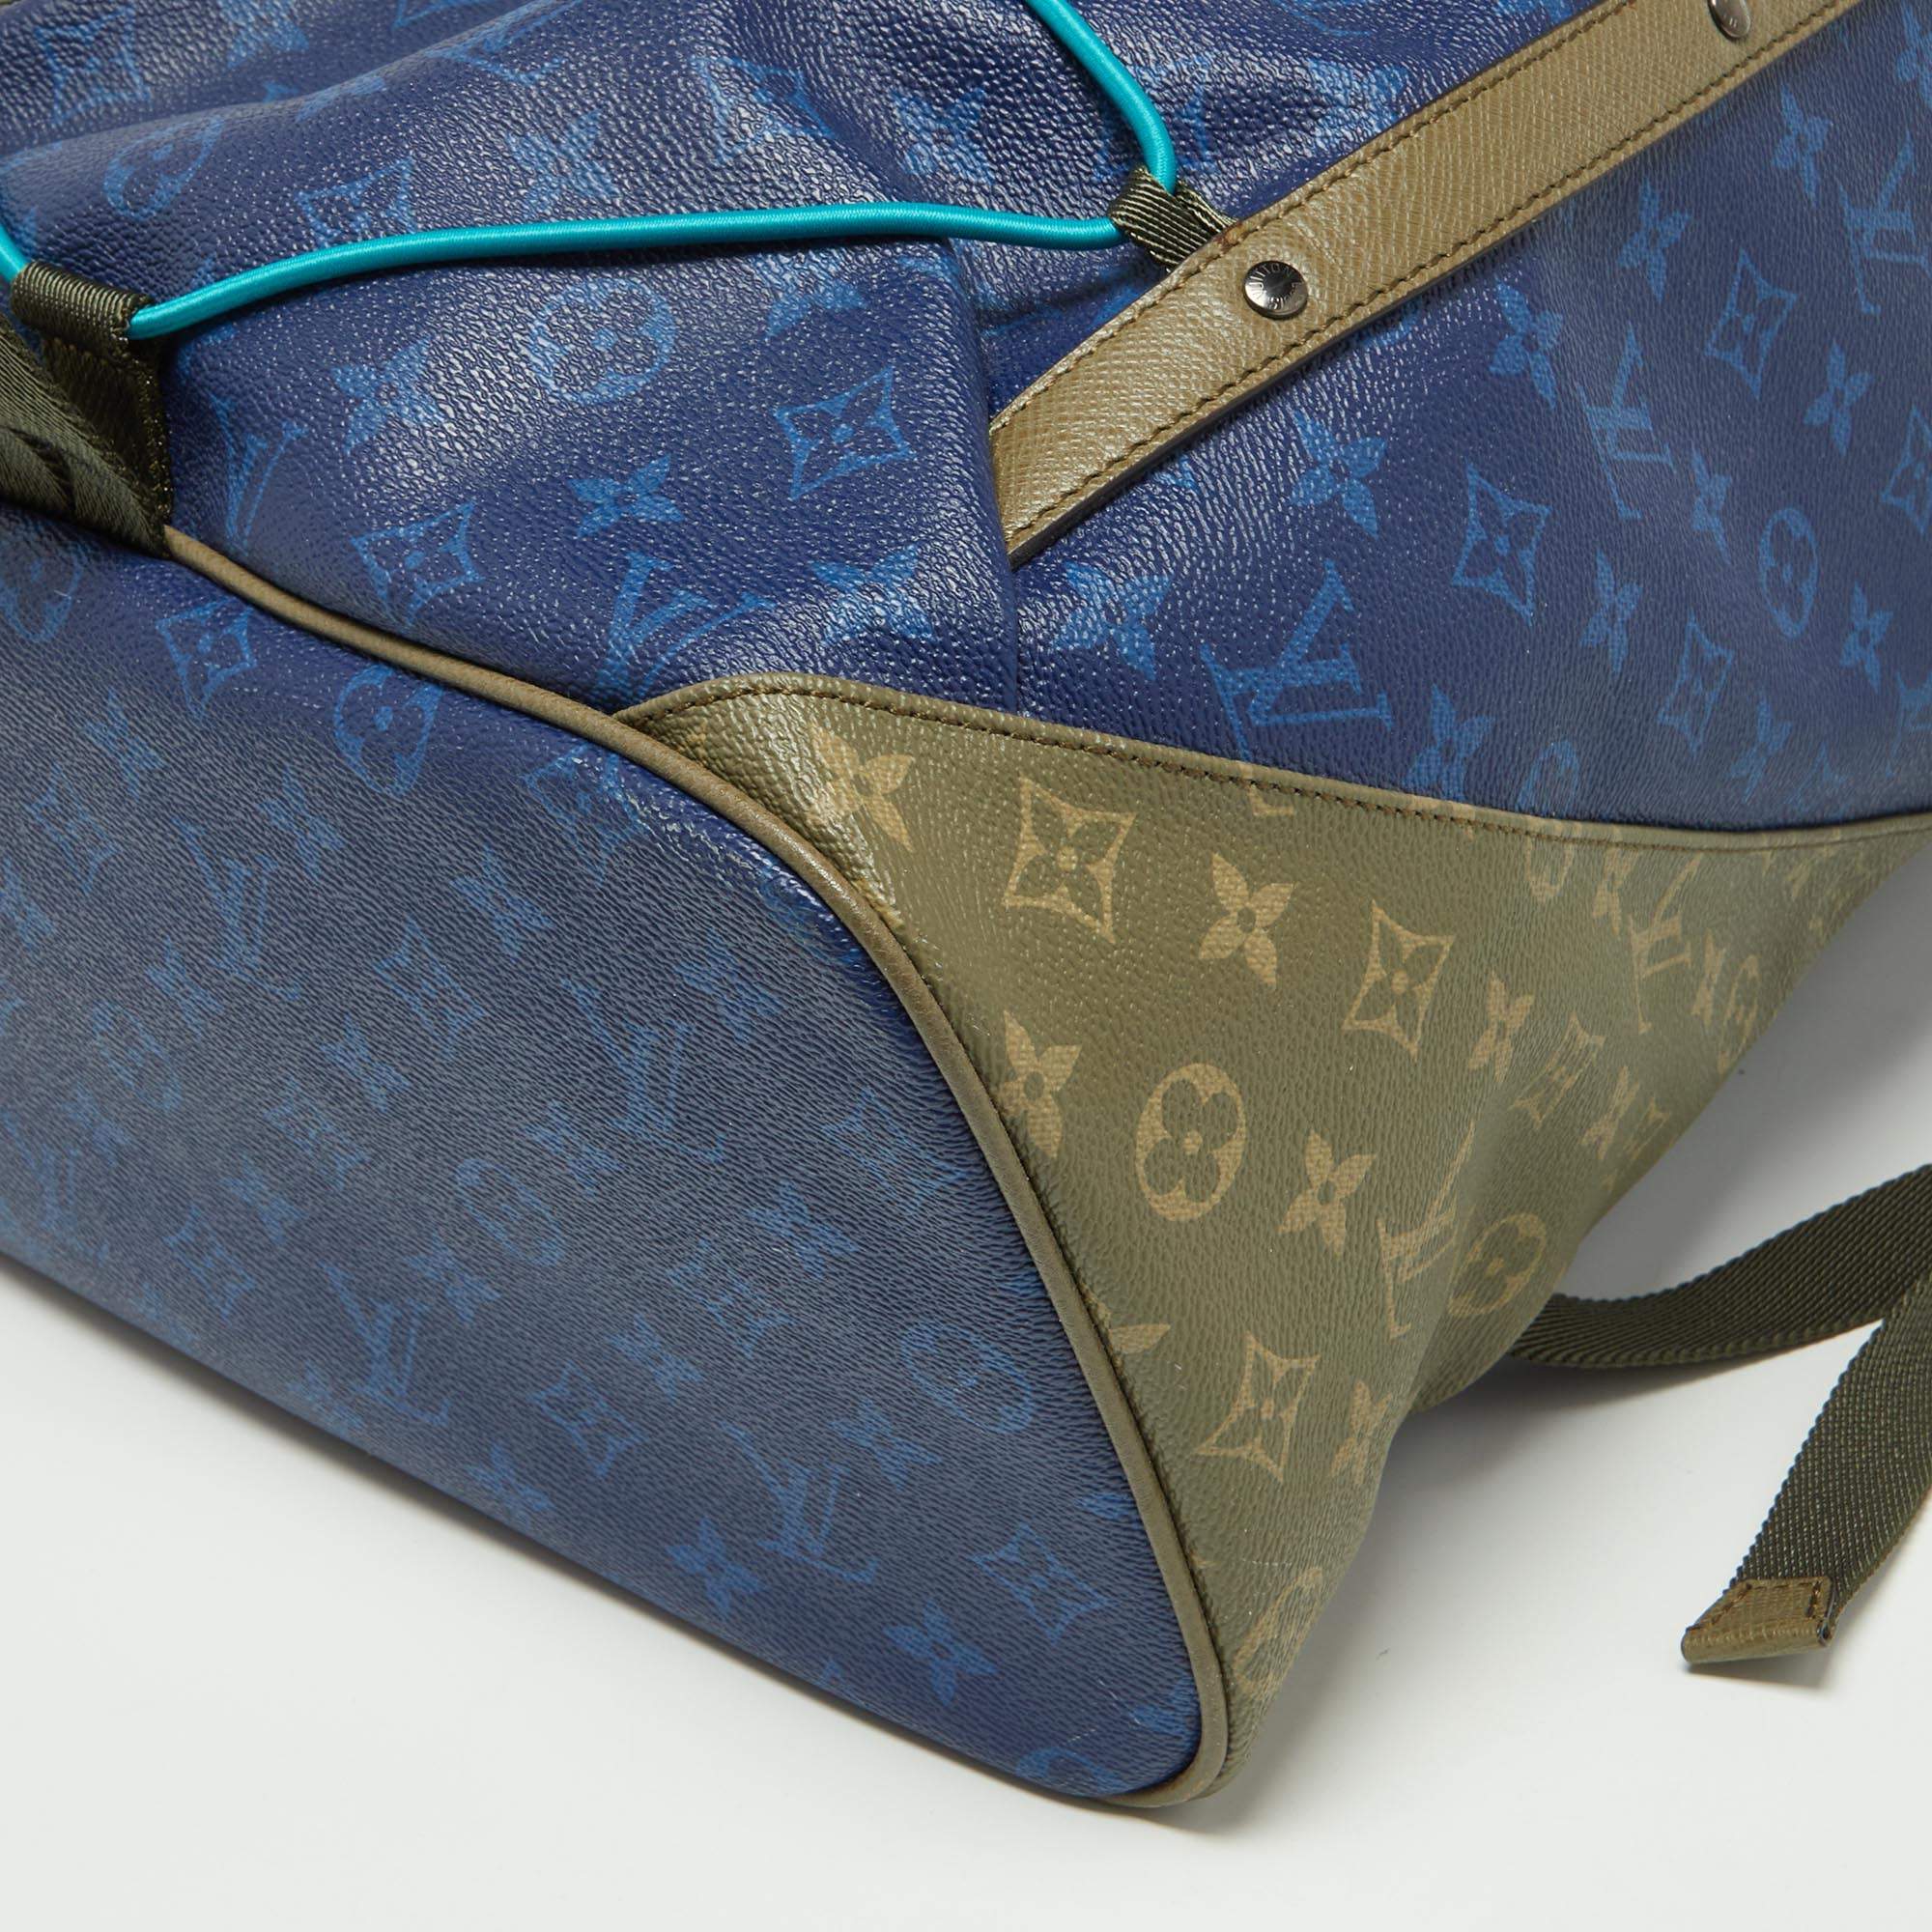 Louis Vuitton Monogram Outdoor Backpack - Blue Backpacks, Bags - LOU790883